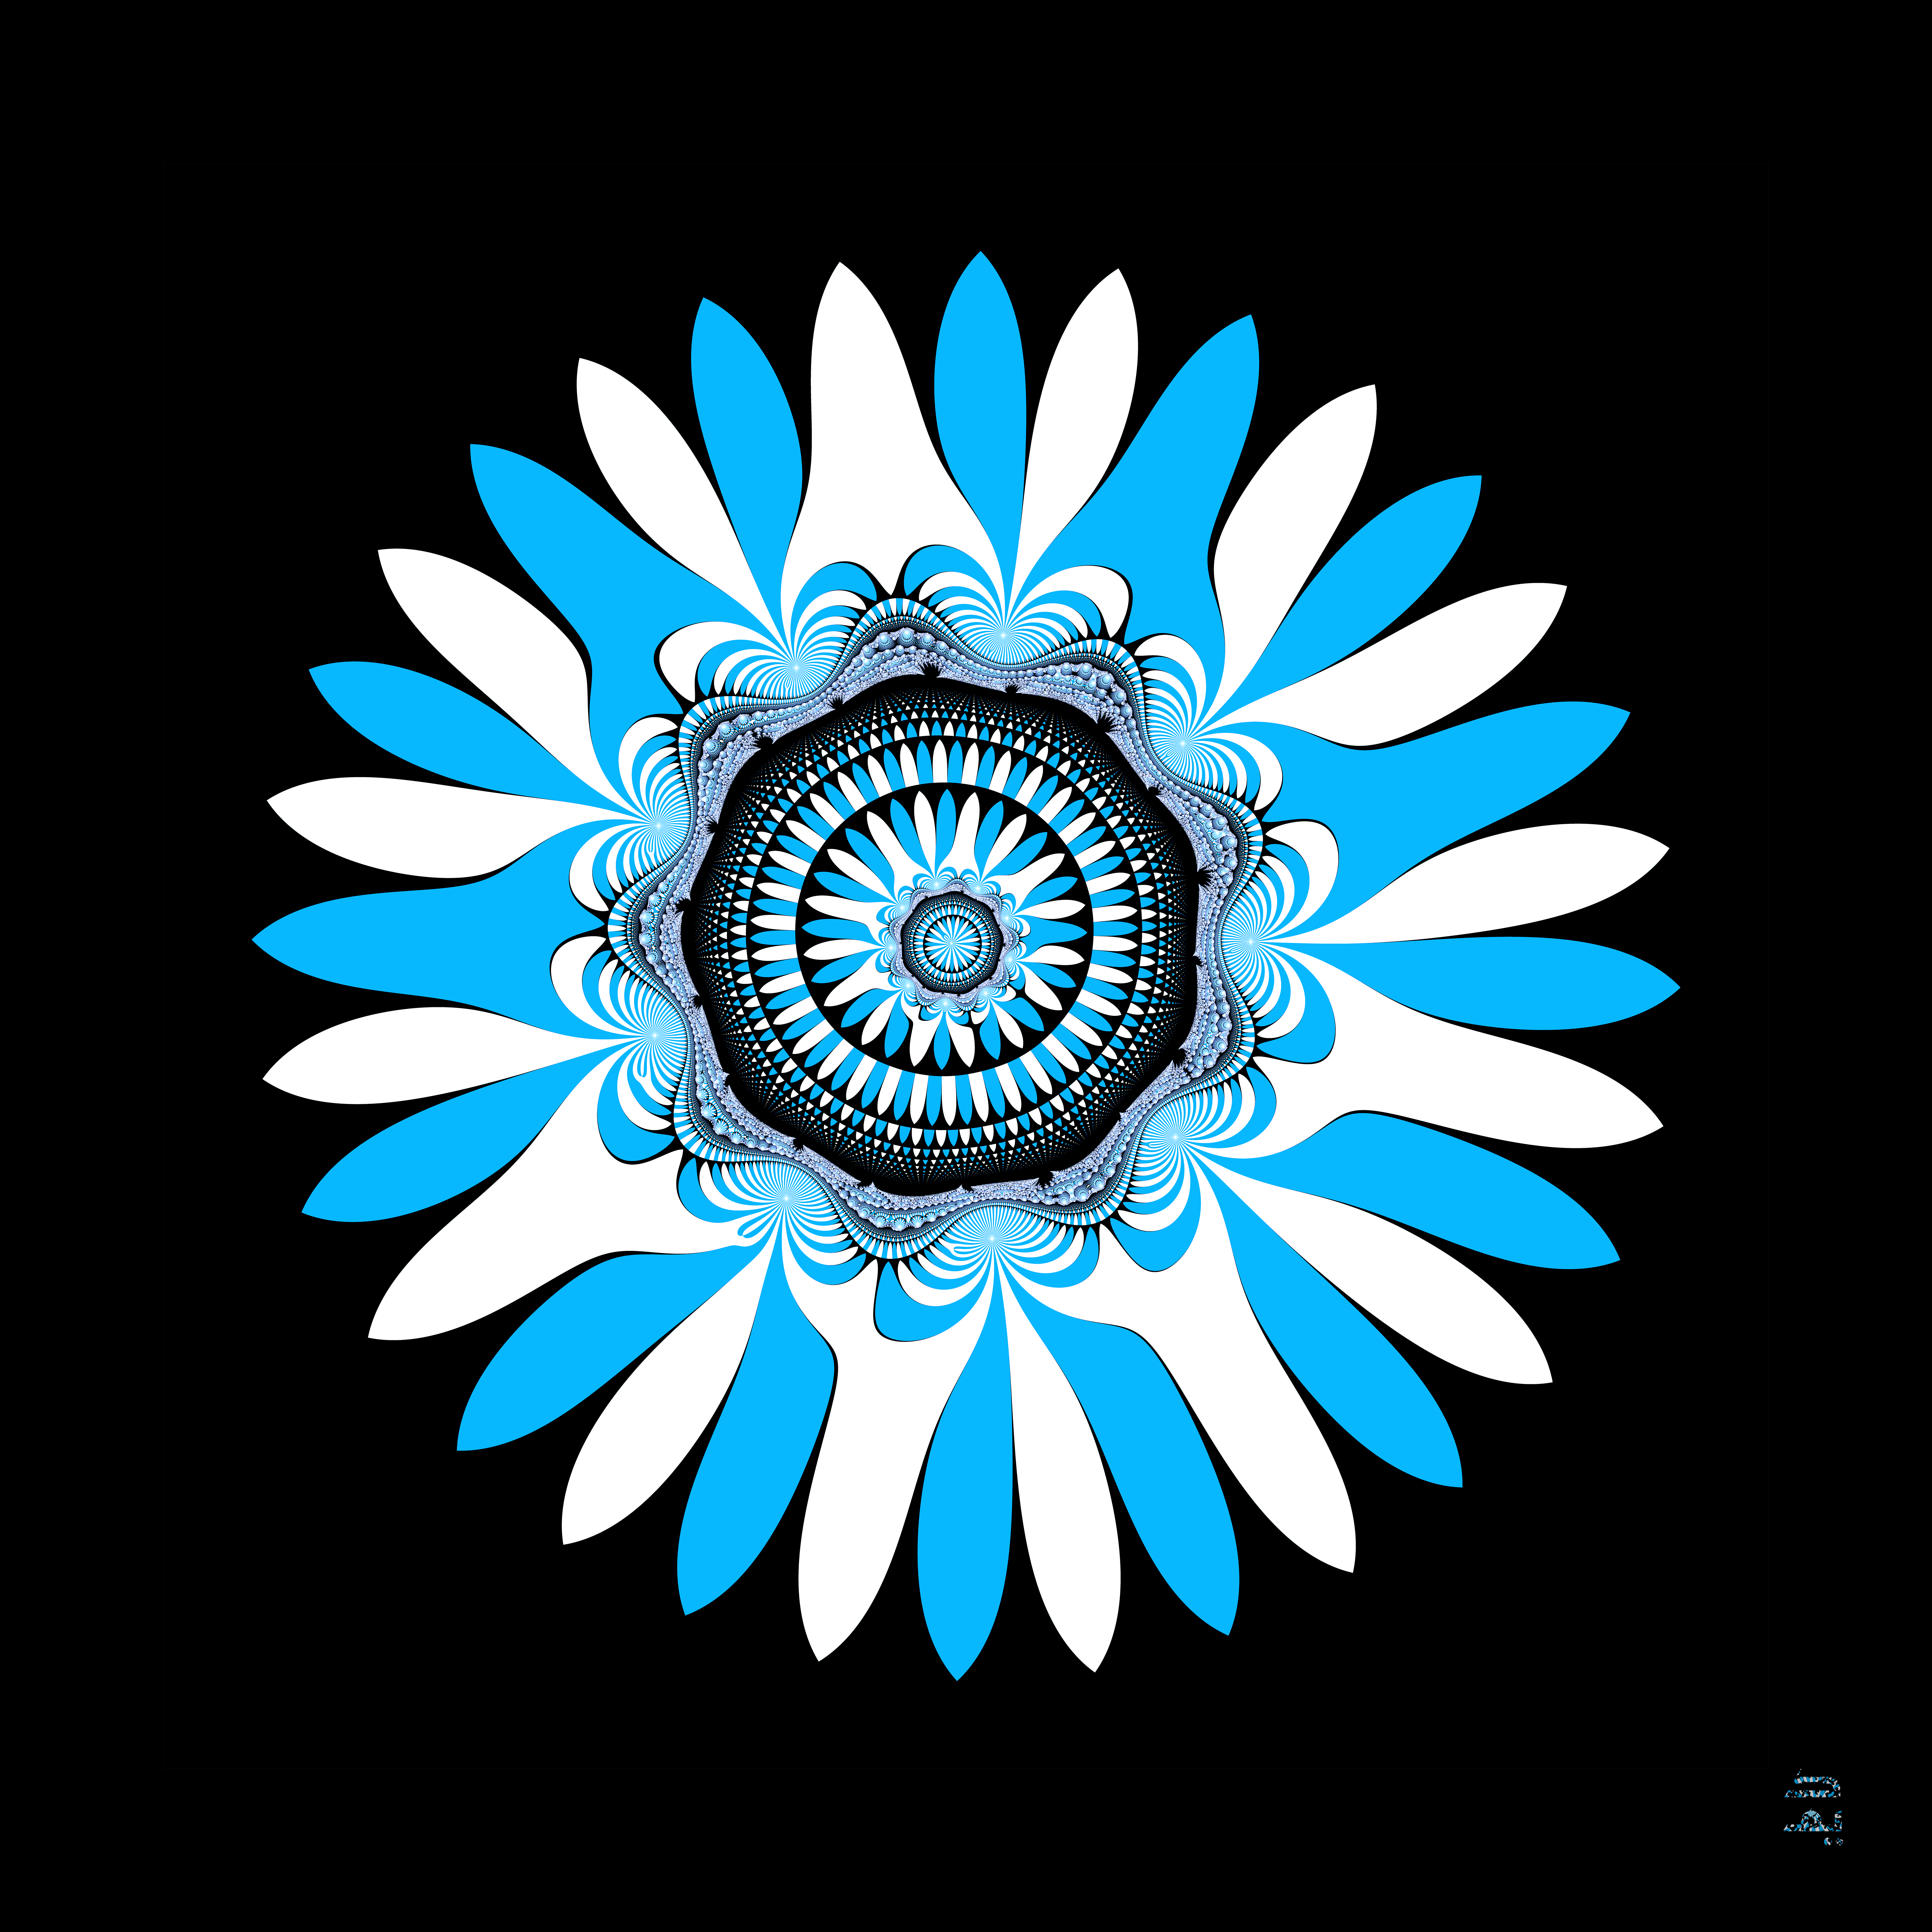 Warhol's Gregarious Celestial Flower